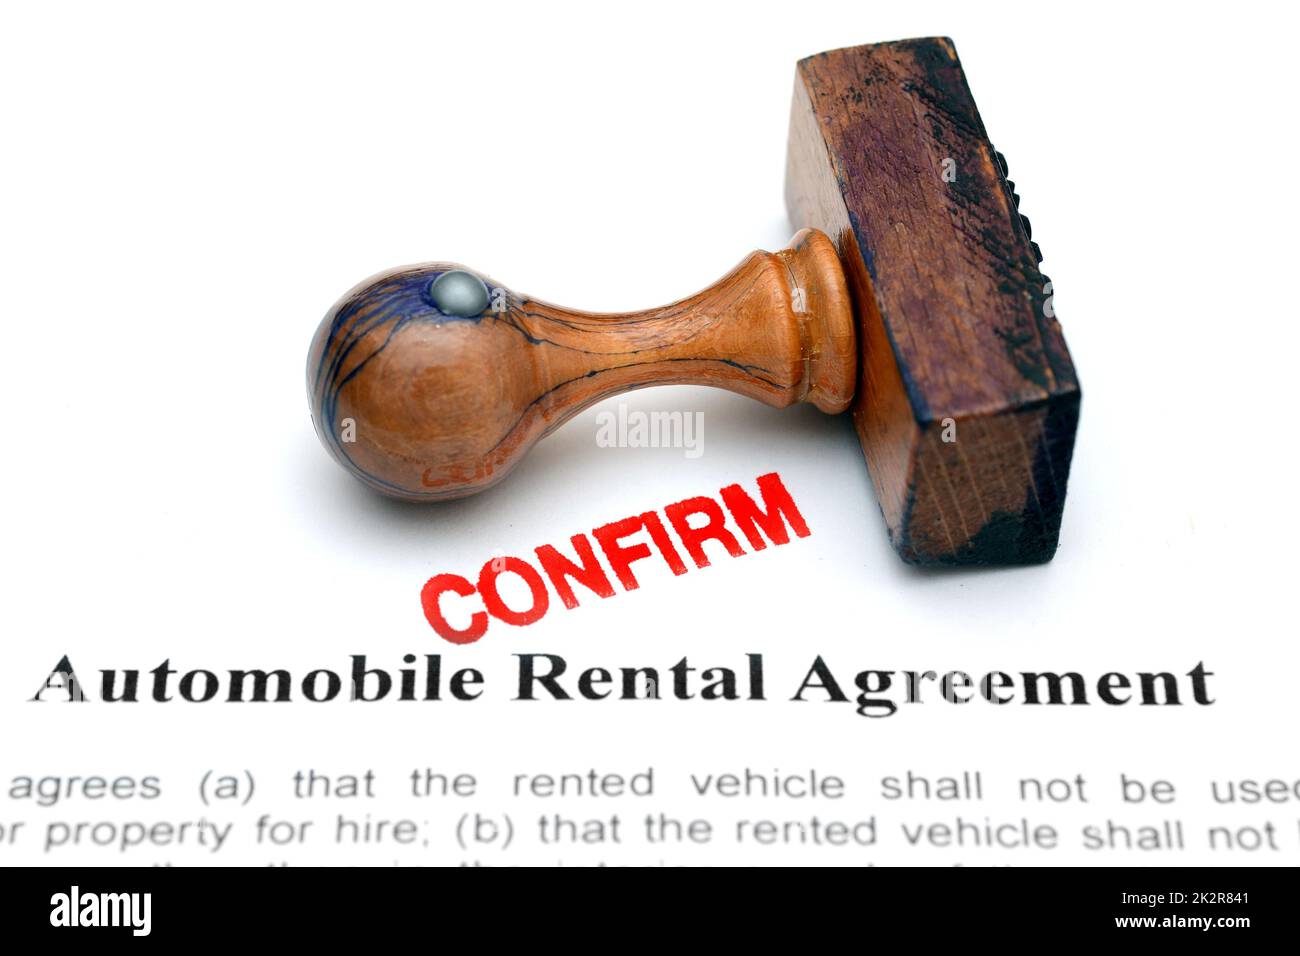 Automobile rental agreement Stock Photo